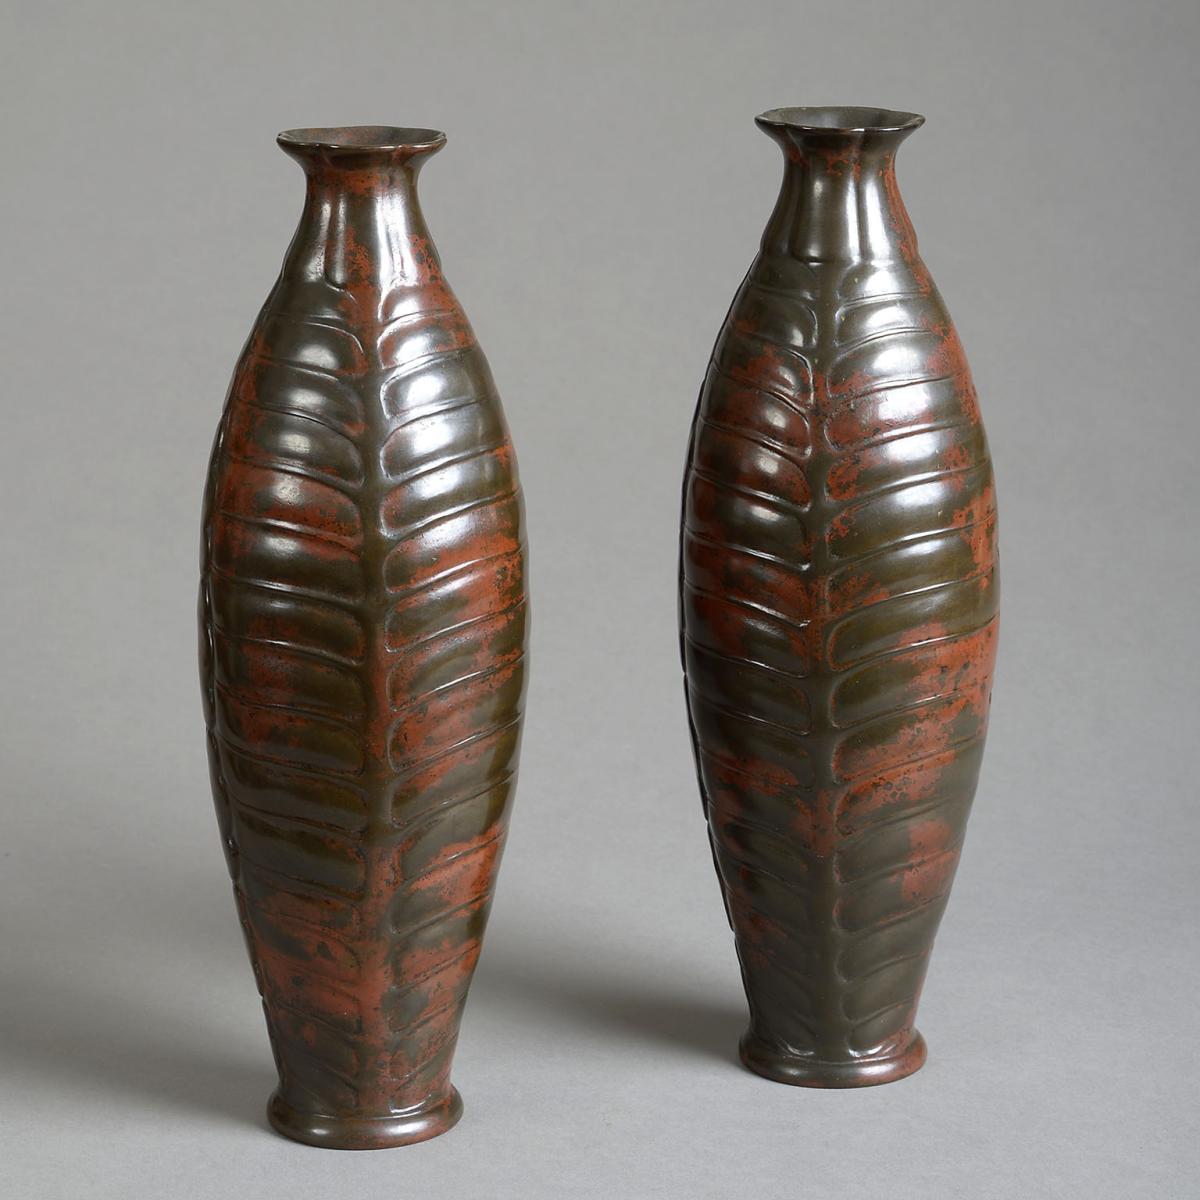 Pair of Japanese bronze Vases